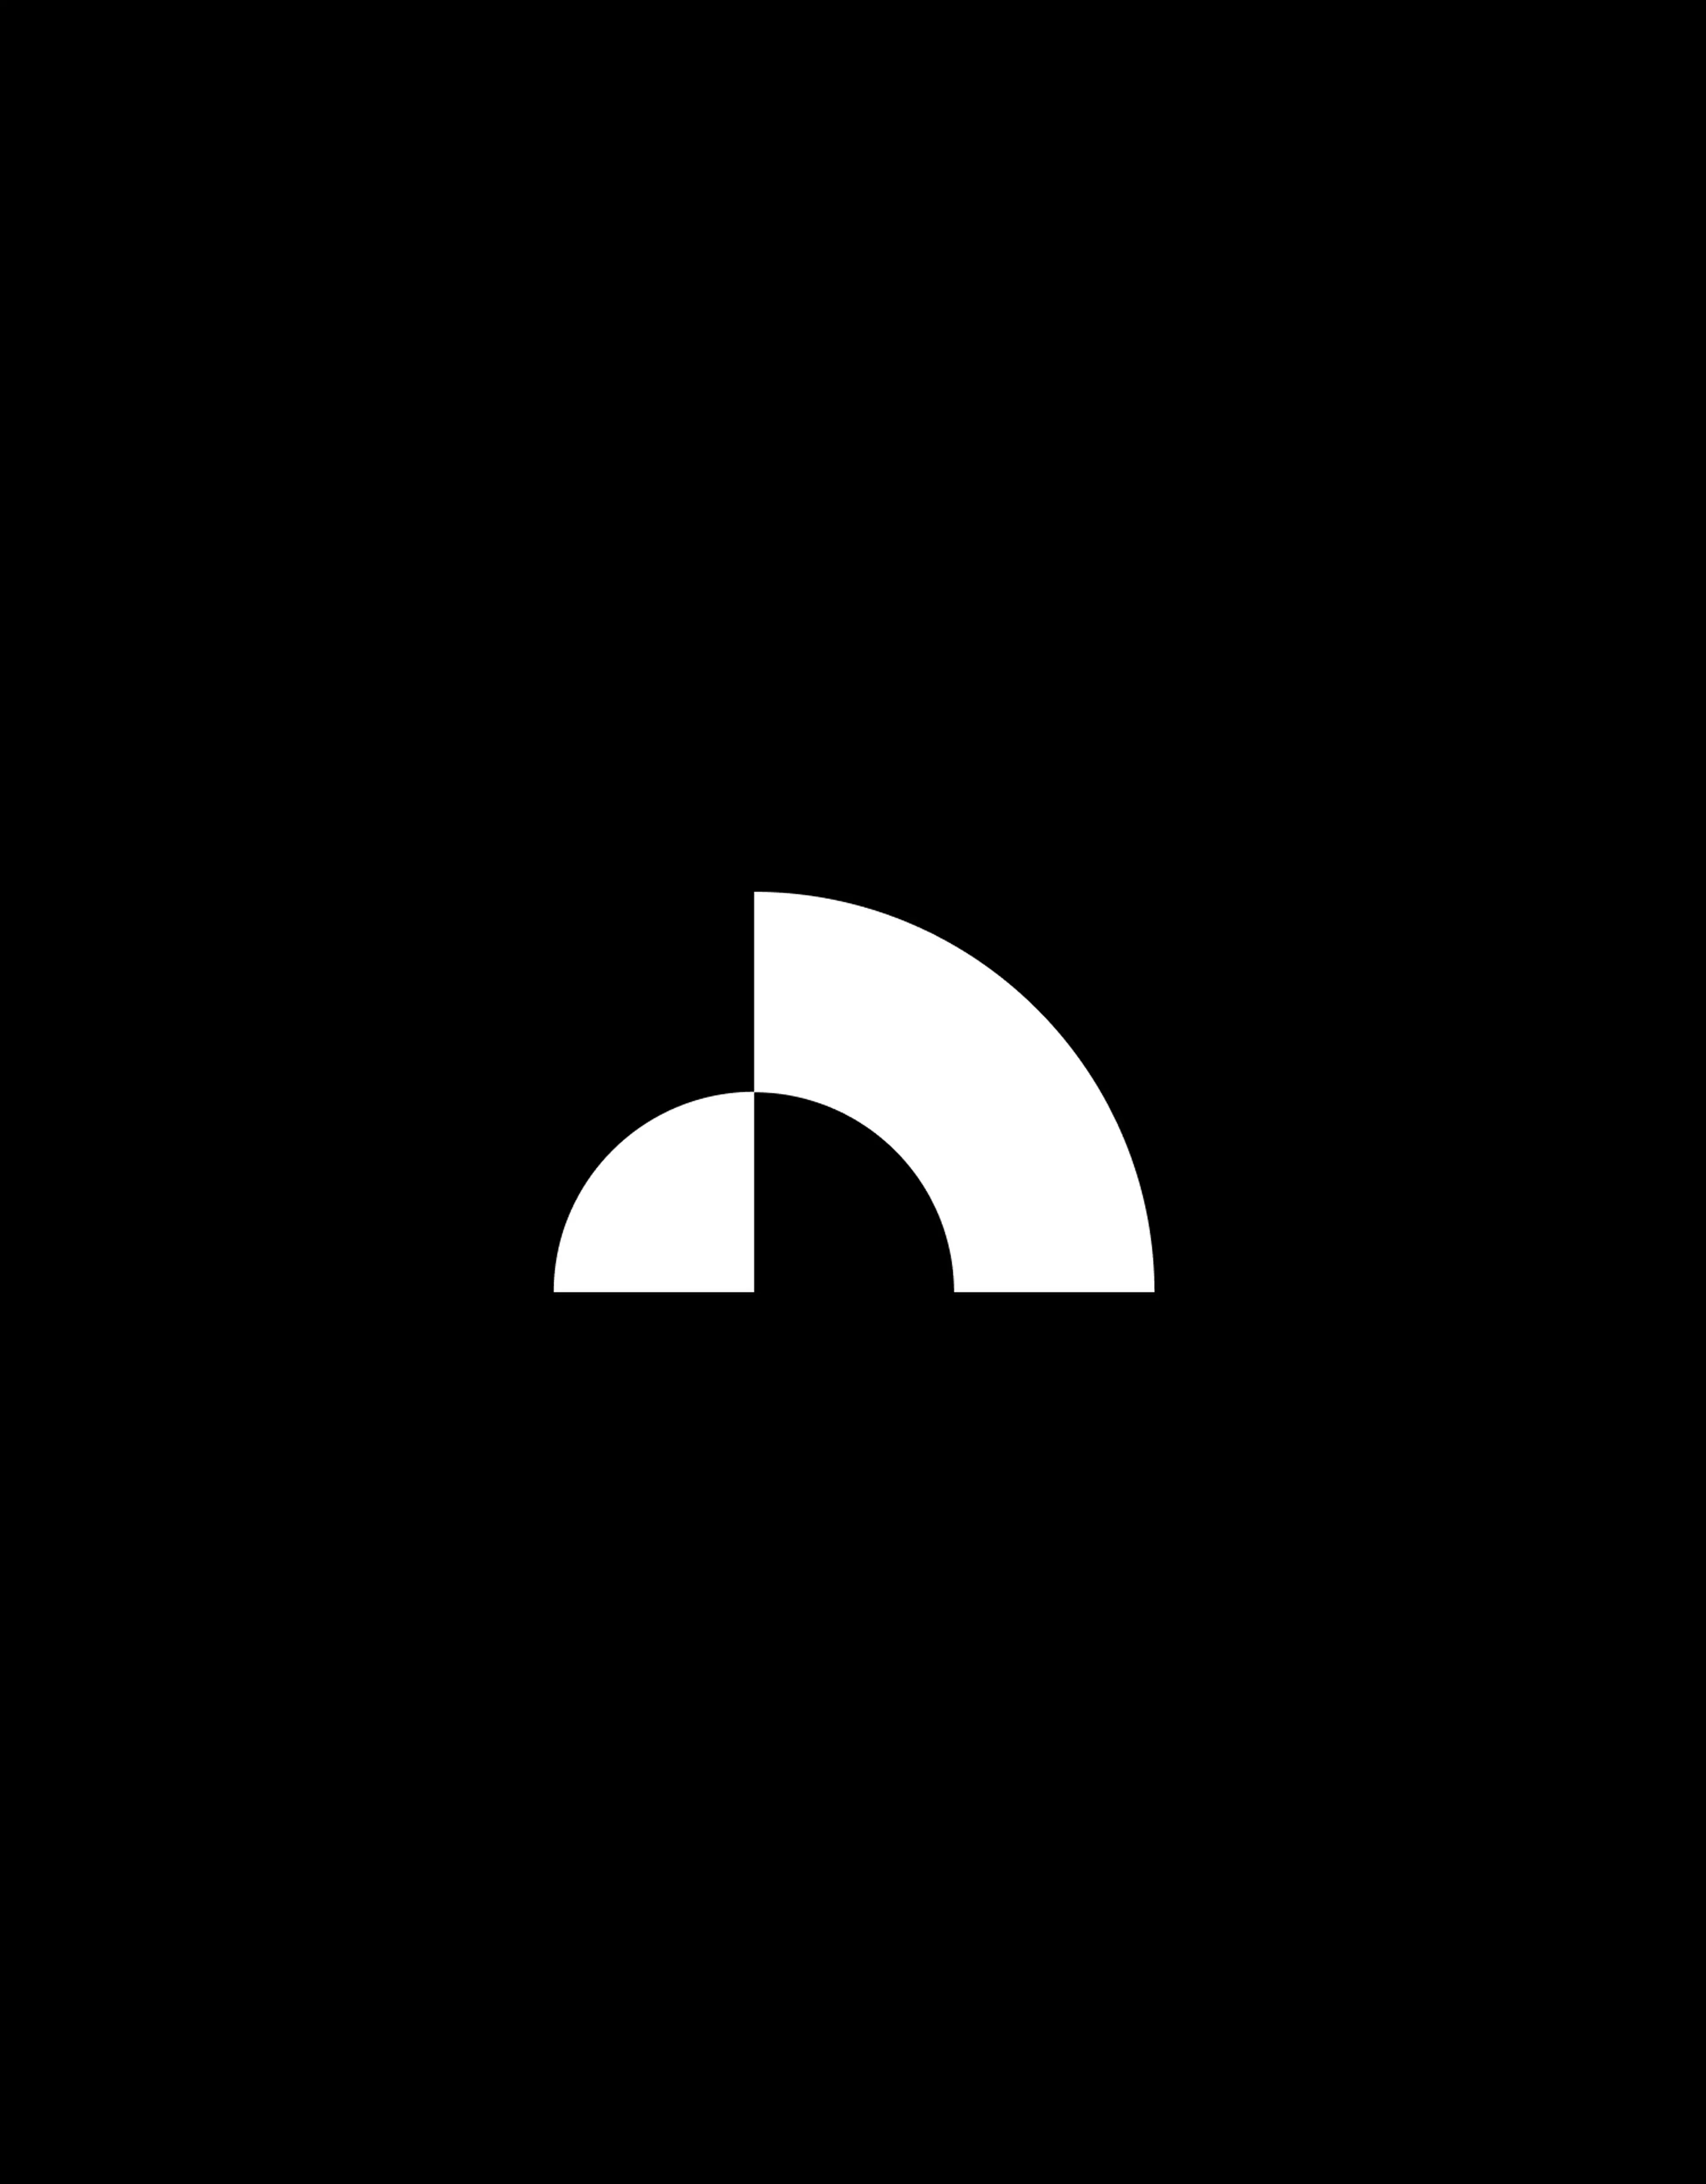 Caelor logo white on black background